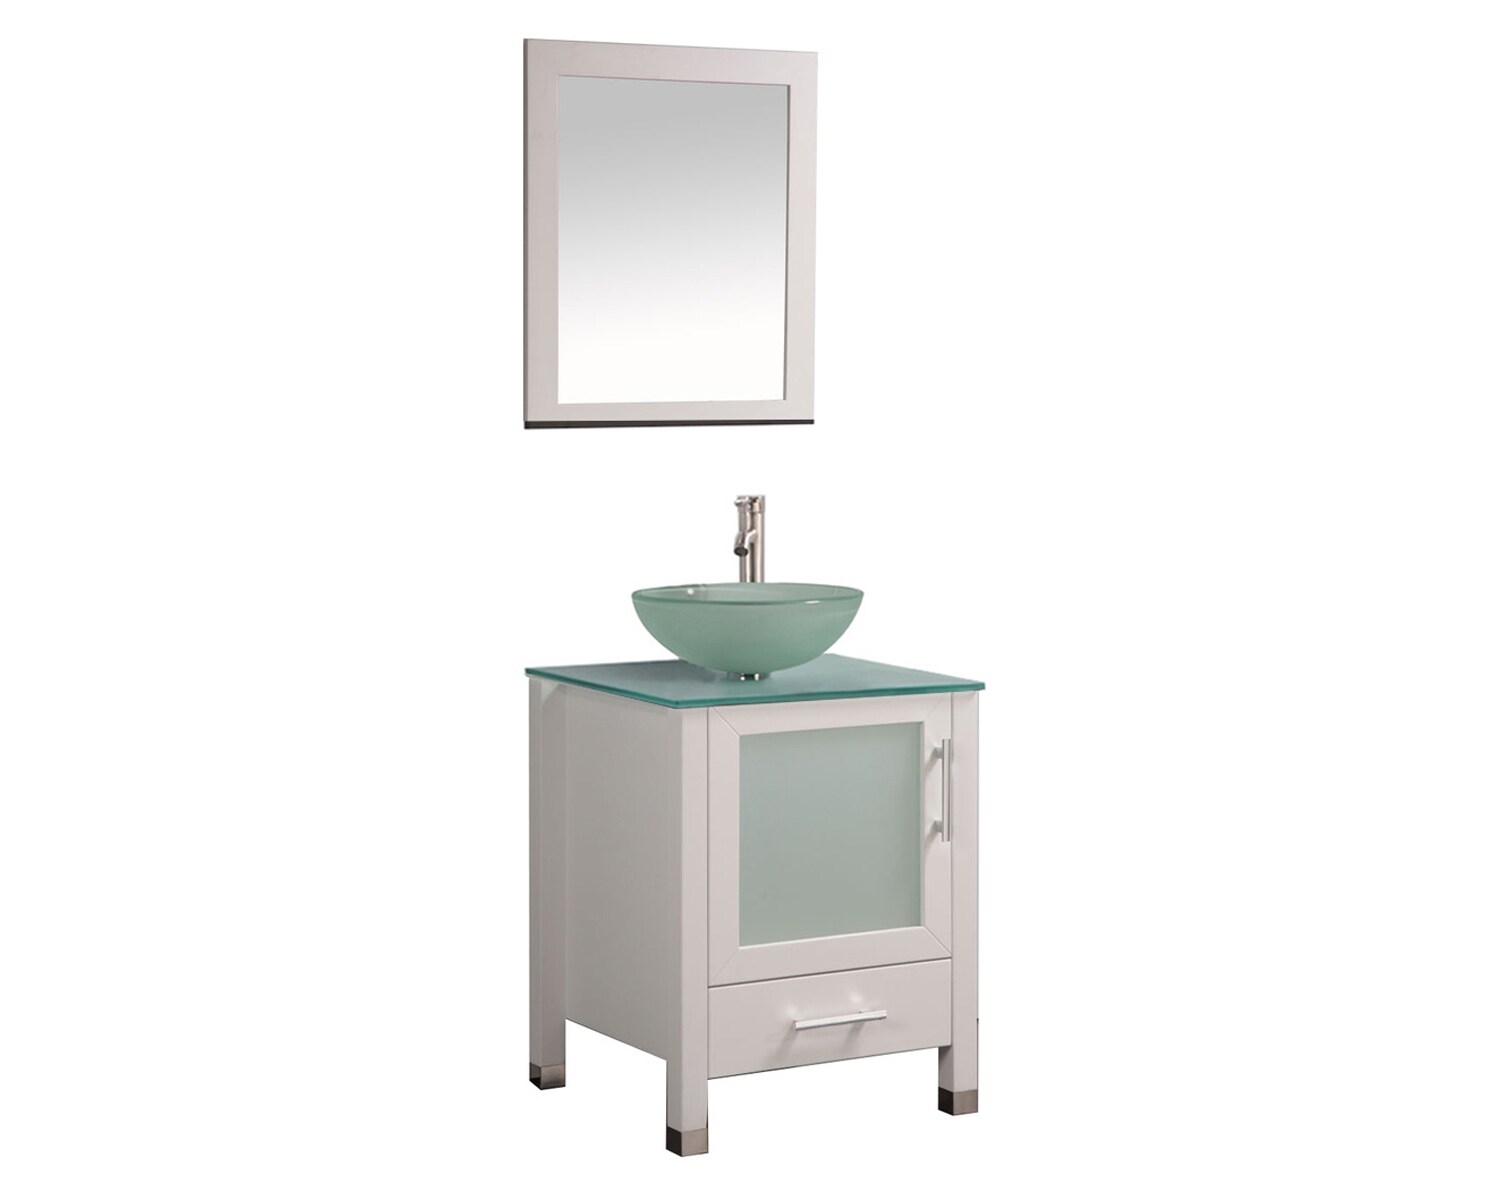 Details about   24" Bathroom Vanity W/Ceramic Vessel Sink Cabinet Single Top Mirror White 